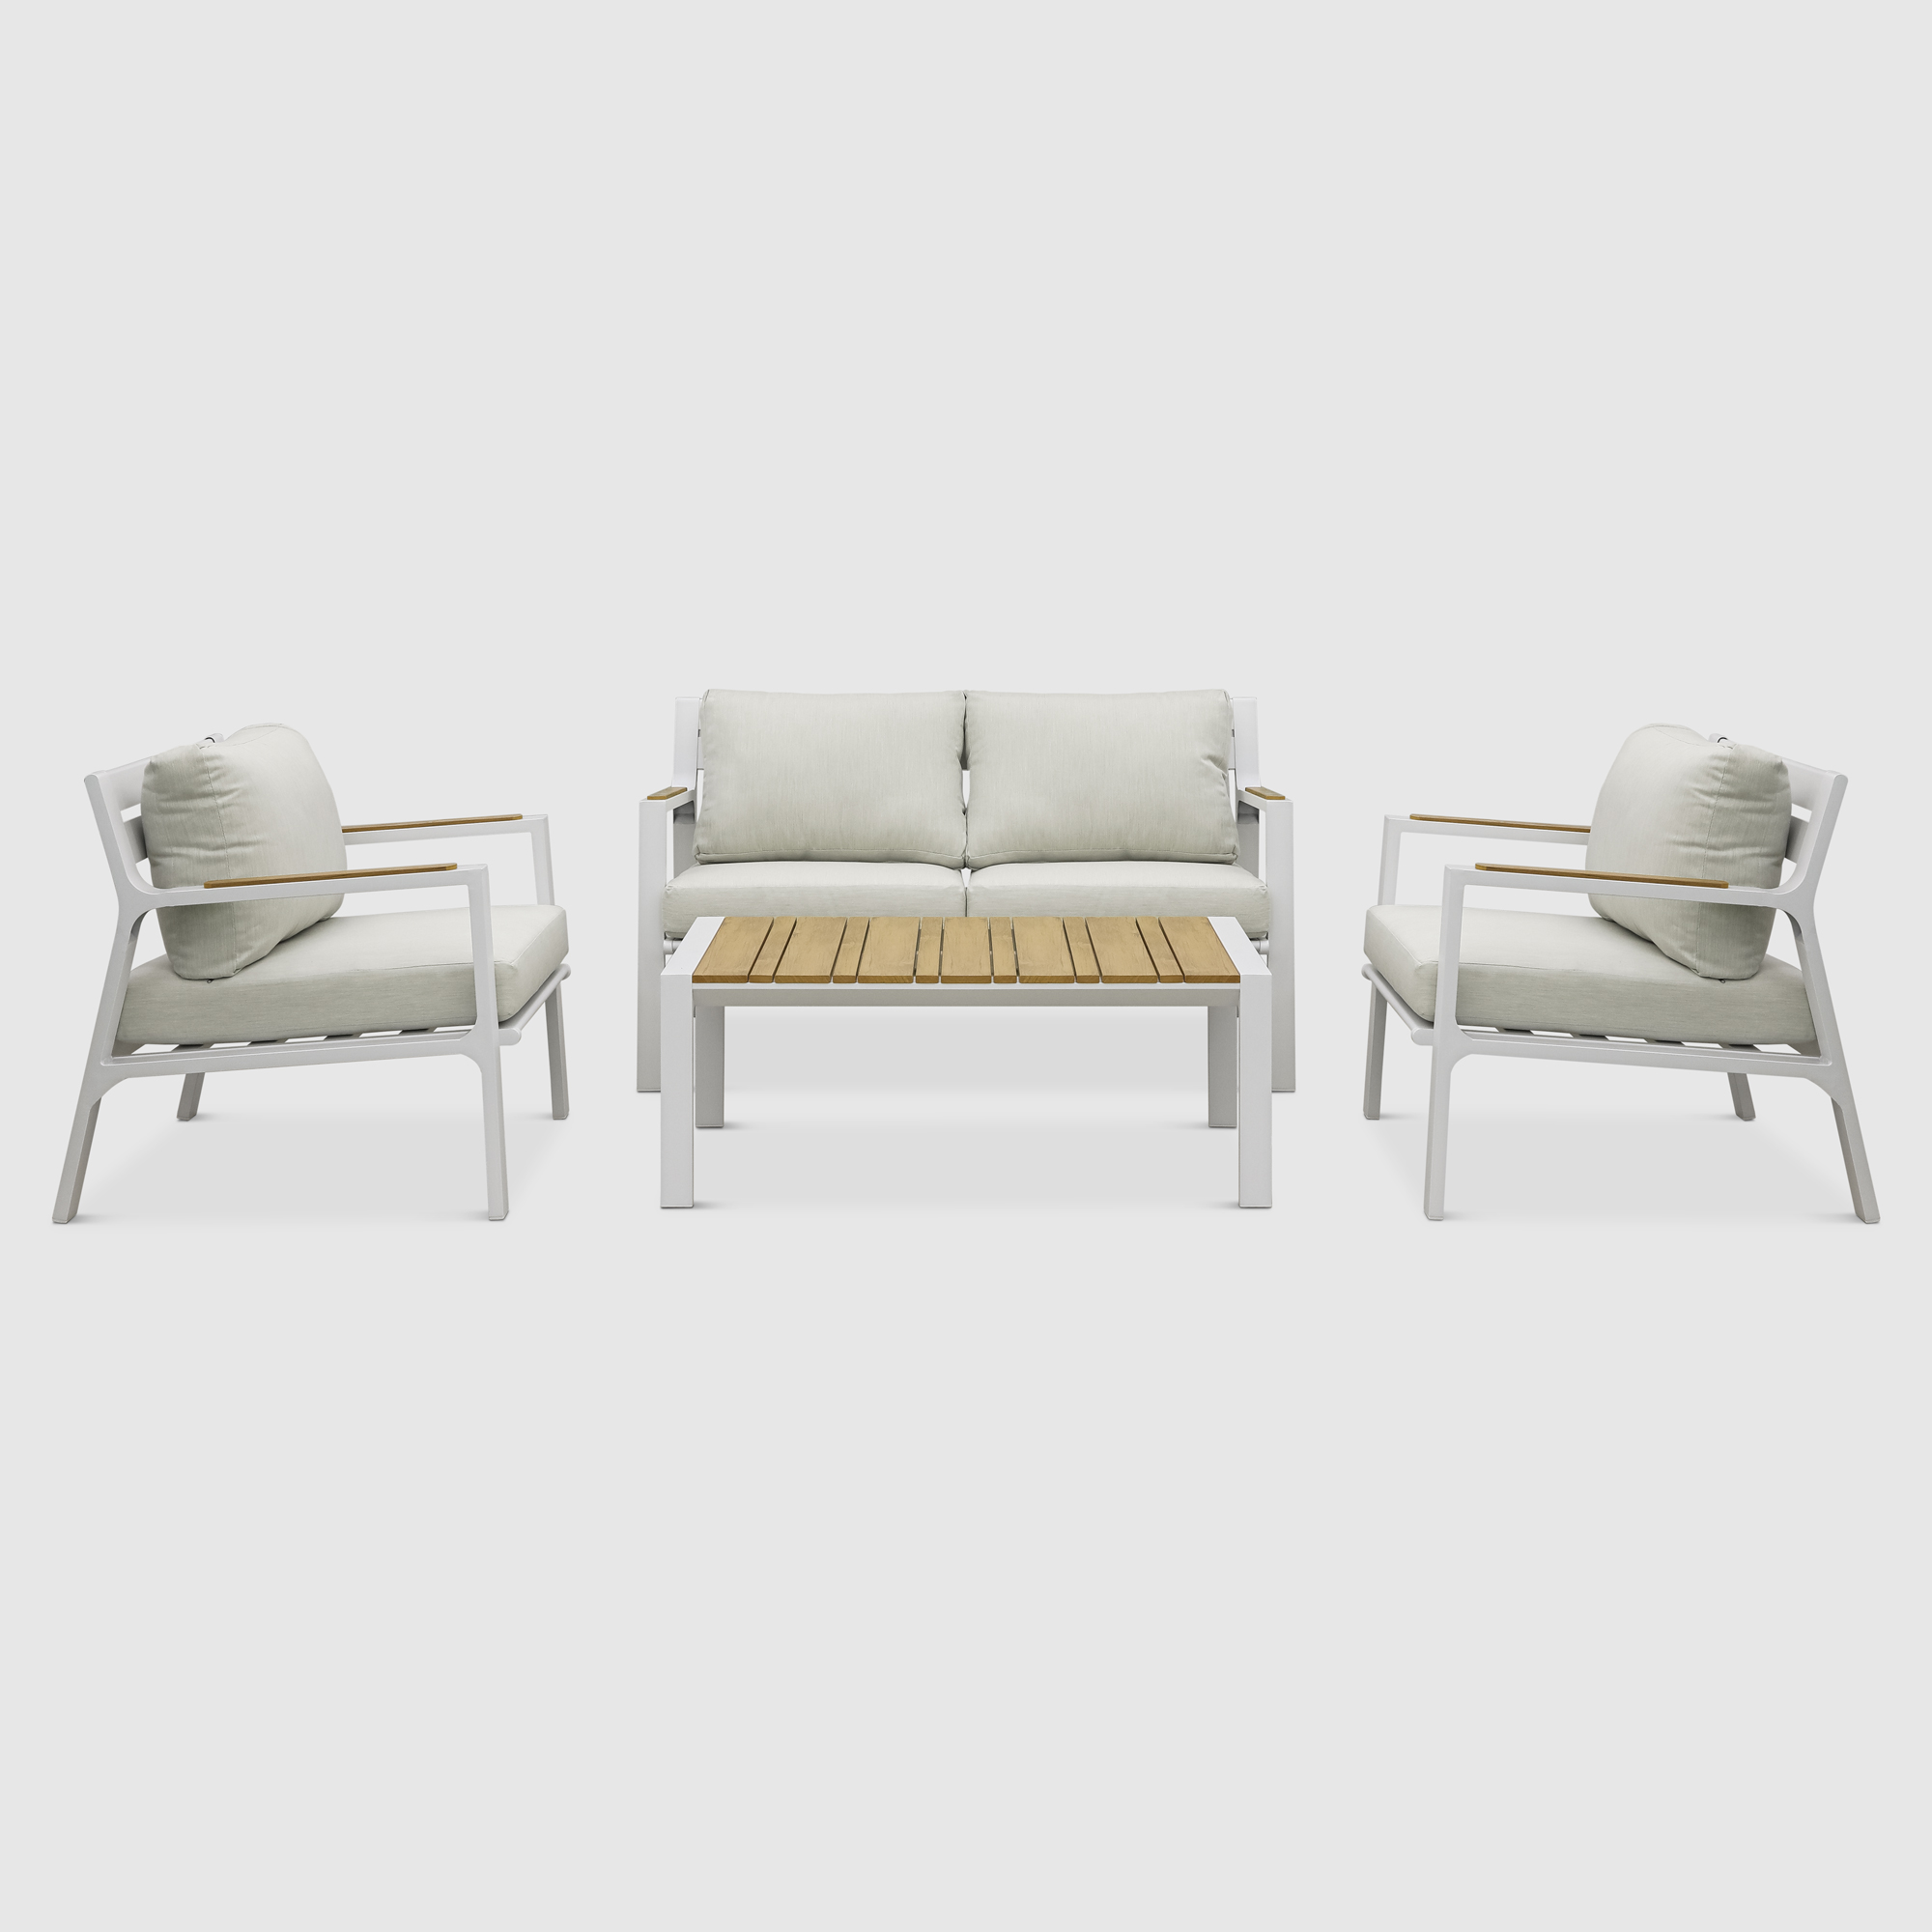 Комплект мебели Bizzotto Ernst белый с подушками 4 предмета комплект bizzotto elias угольный 4 предмета